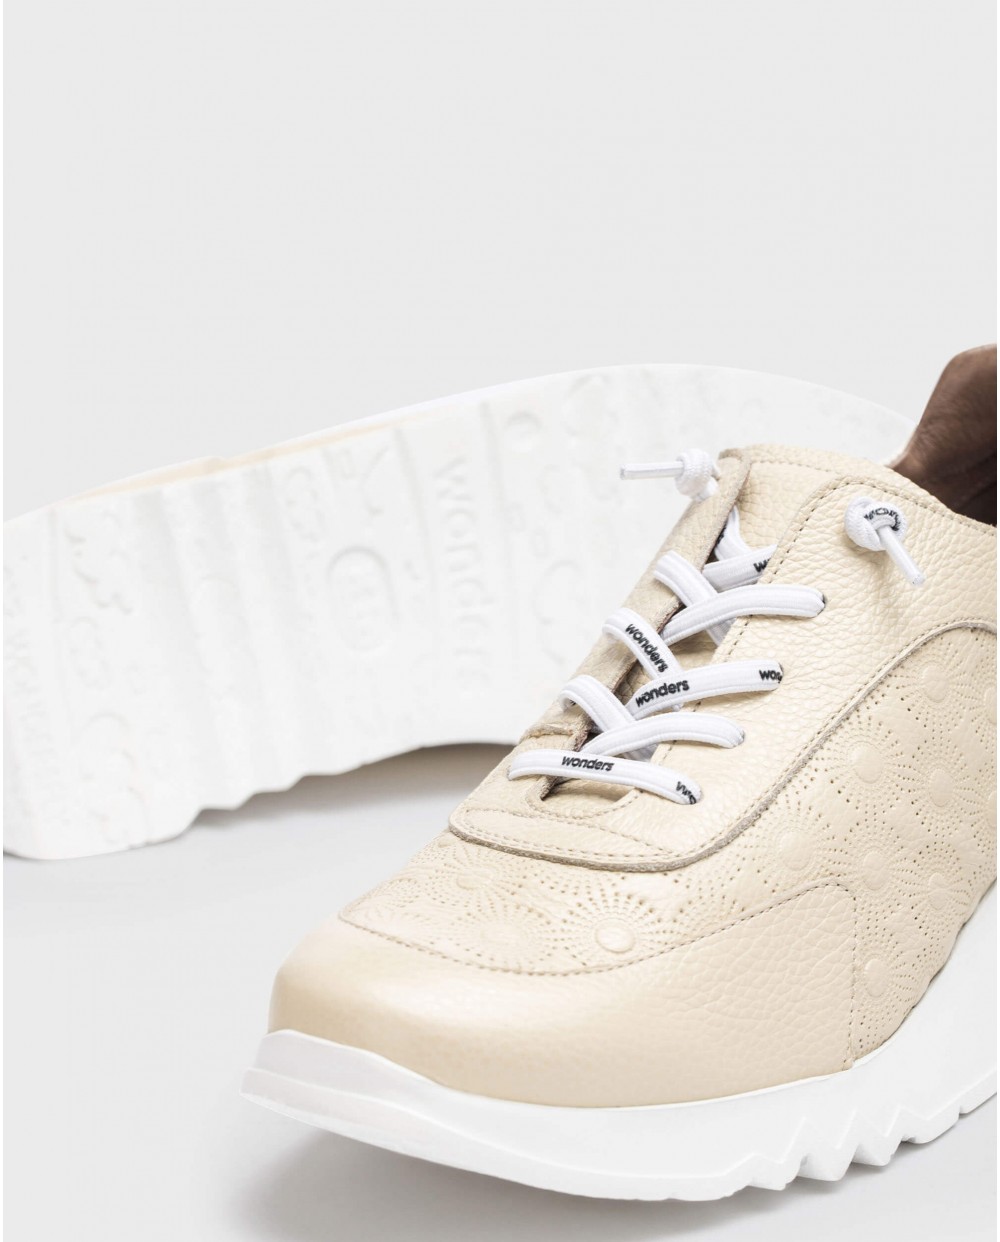 Wonders-Sneakers-Cream ELEVEN sneaker